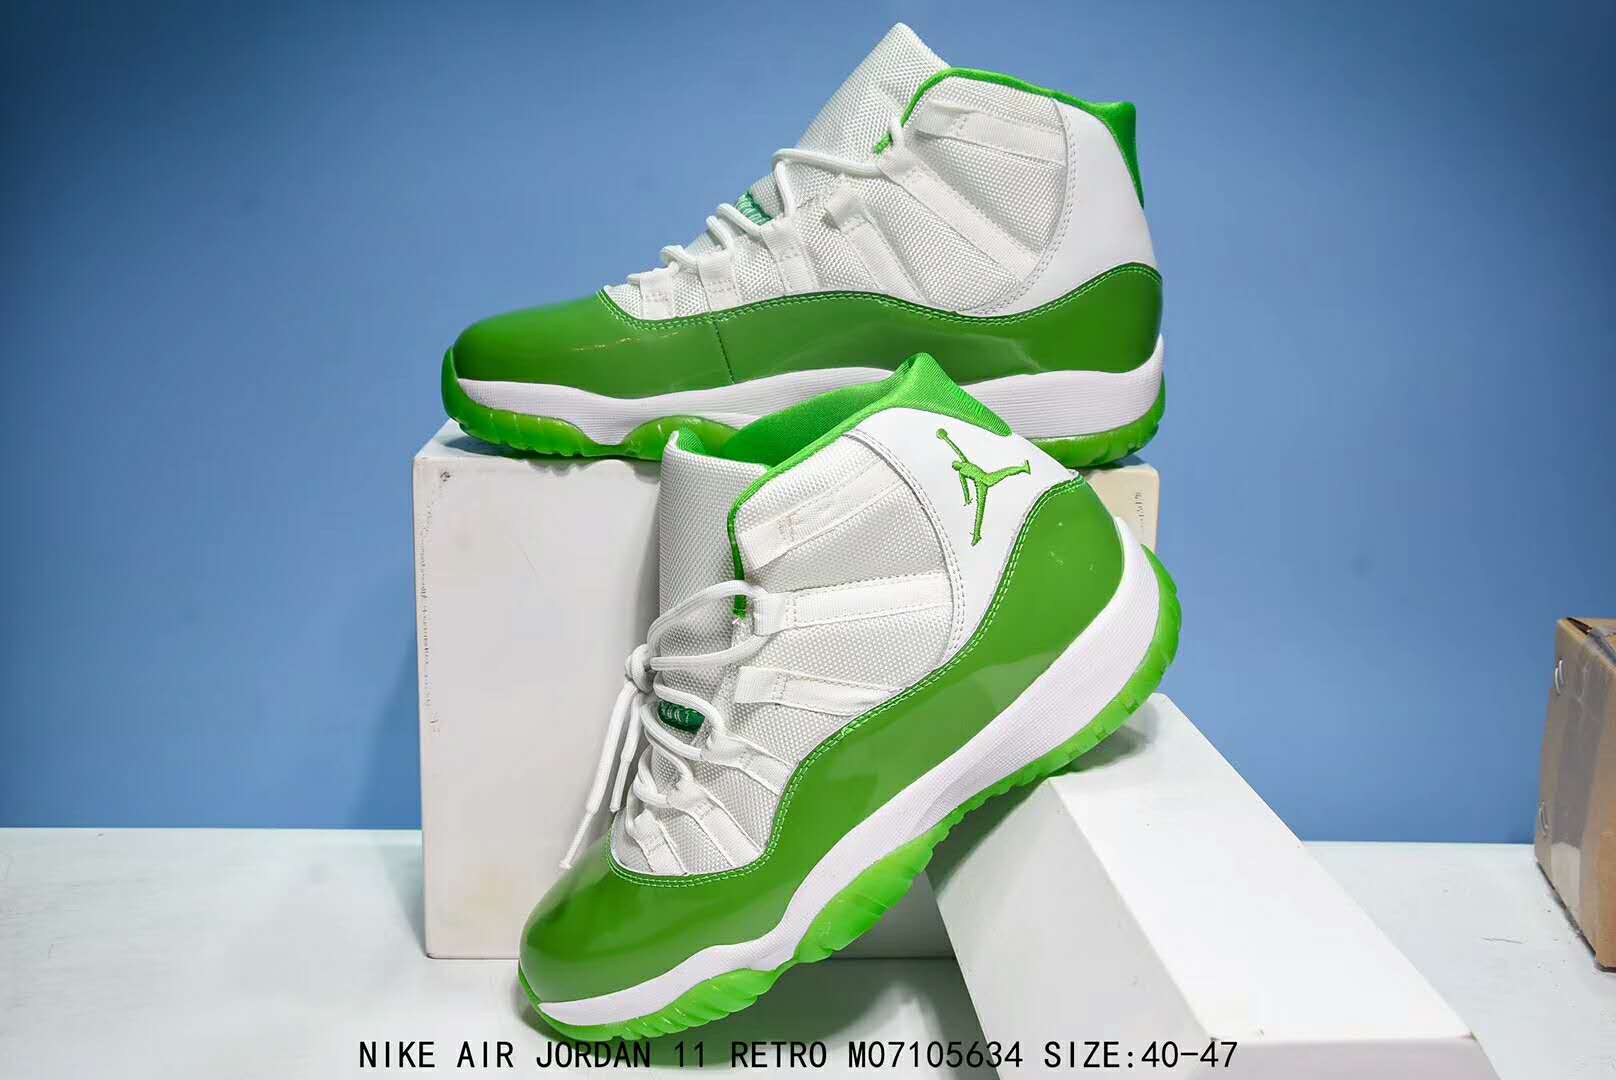 New Air Jordan 11 Retro Apple Green Shoes